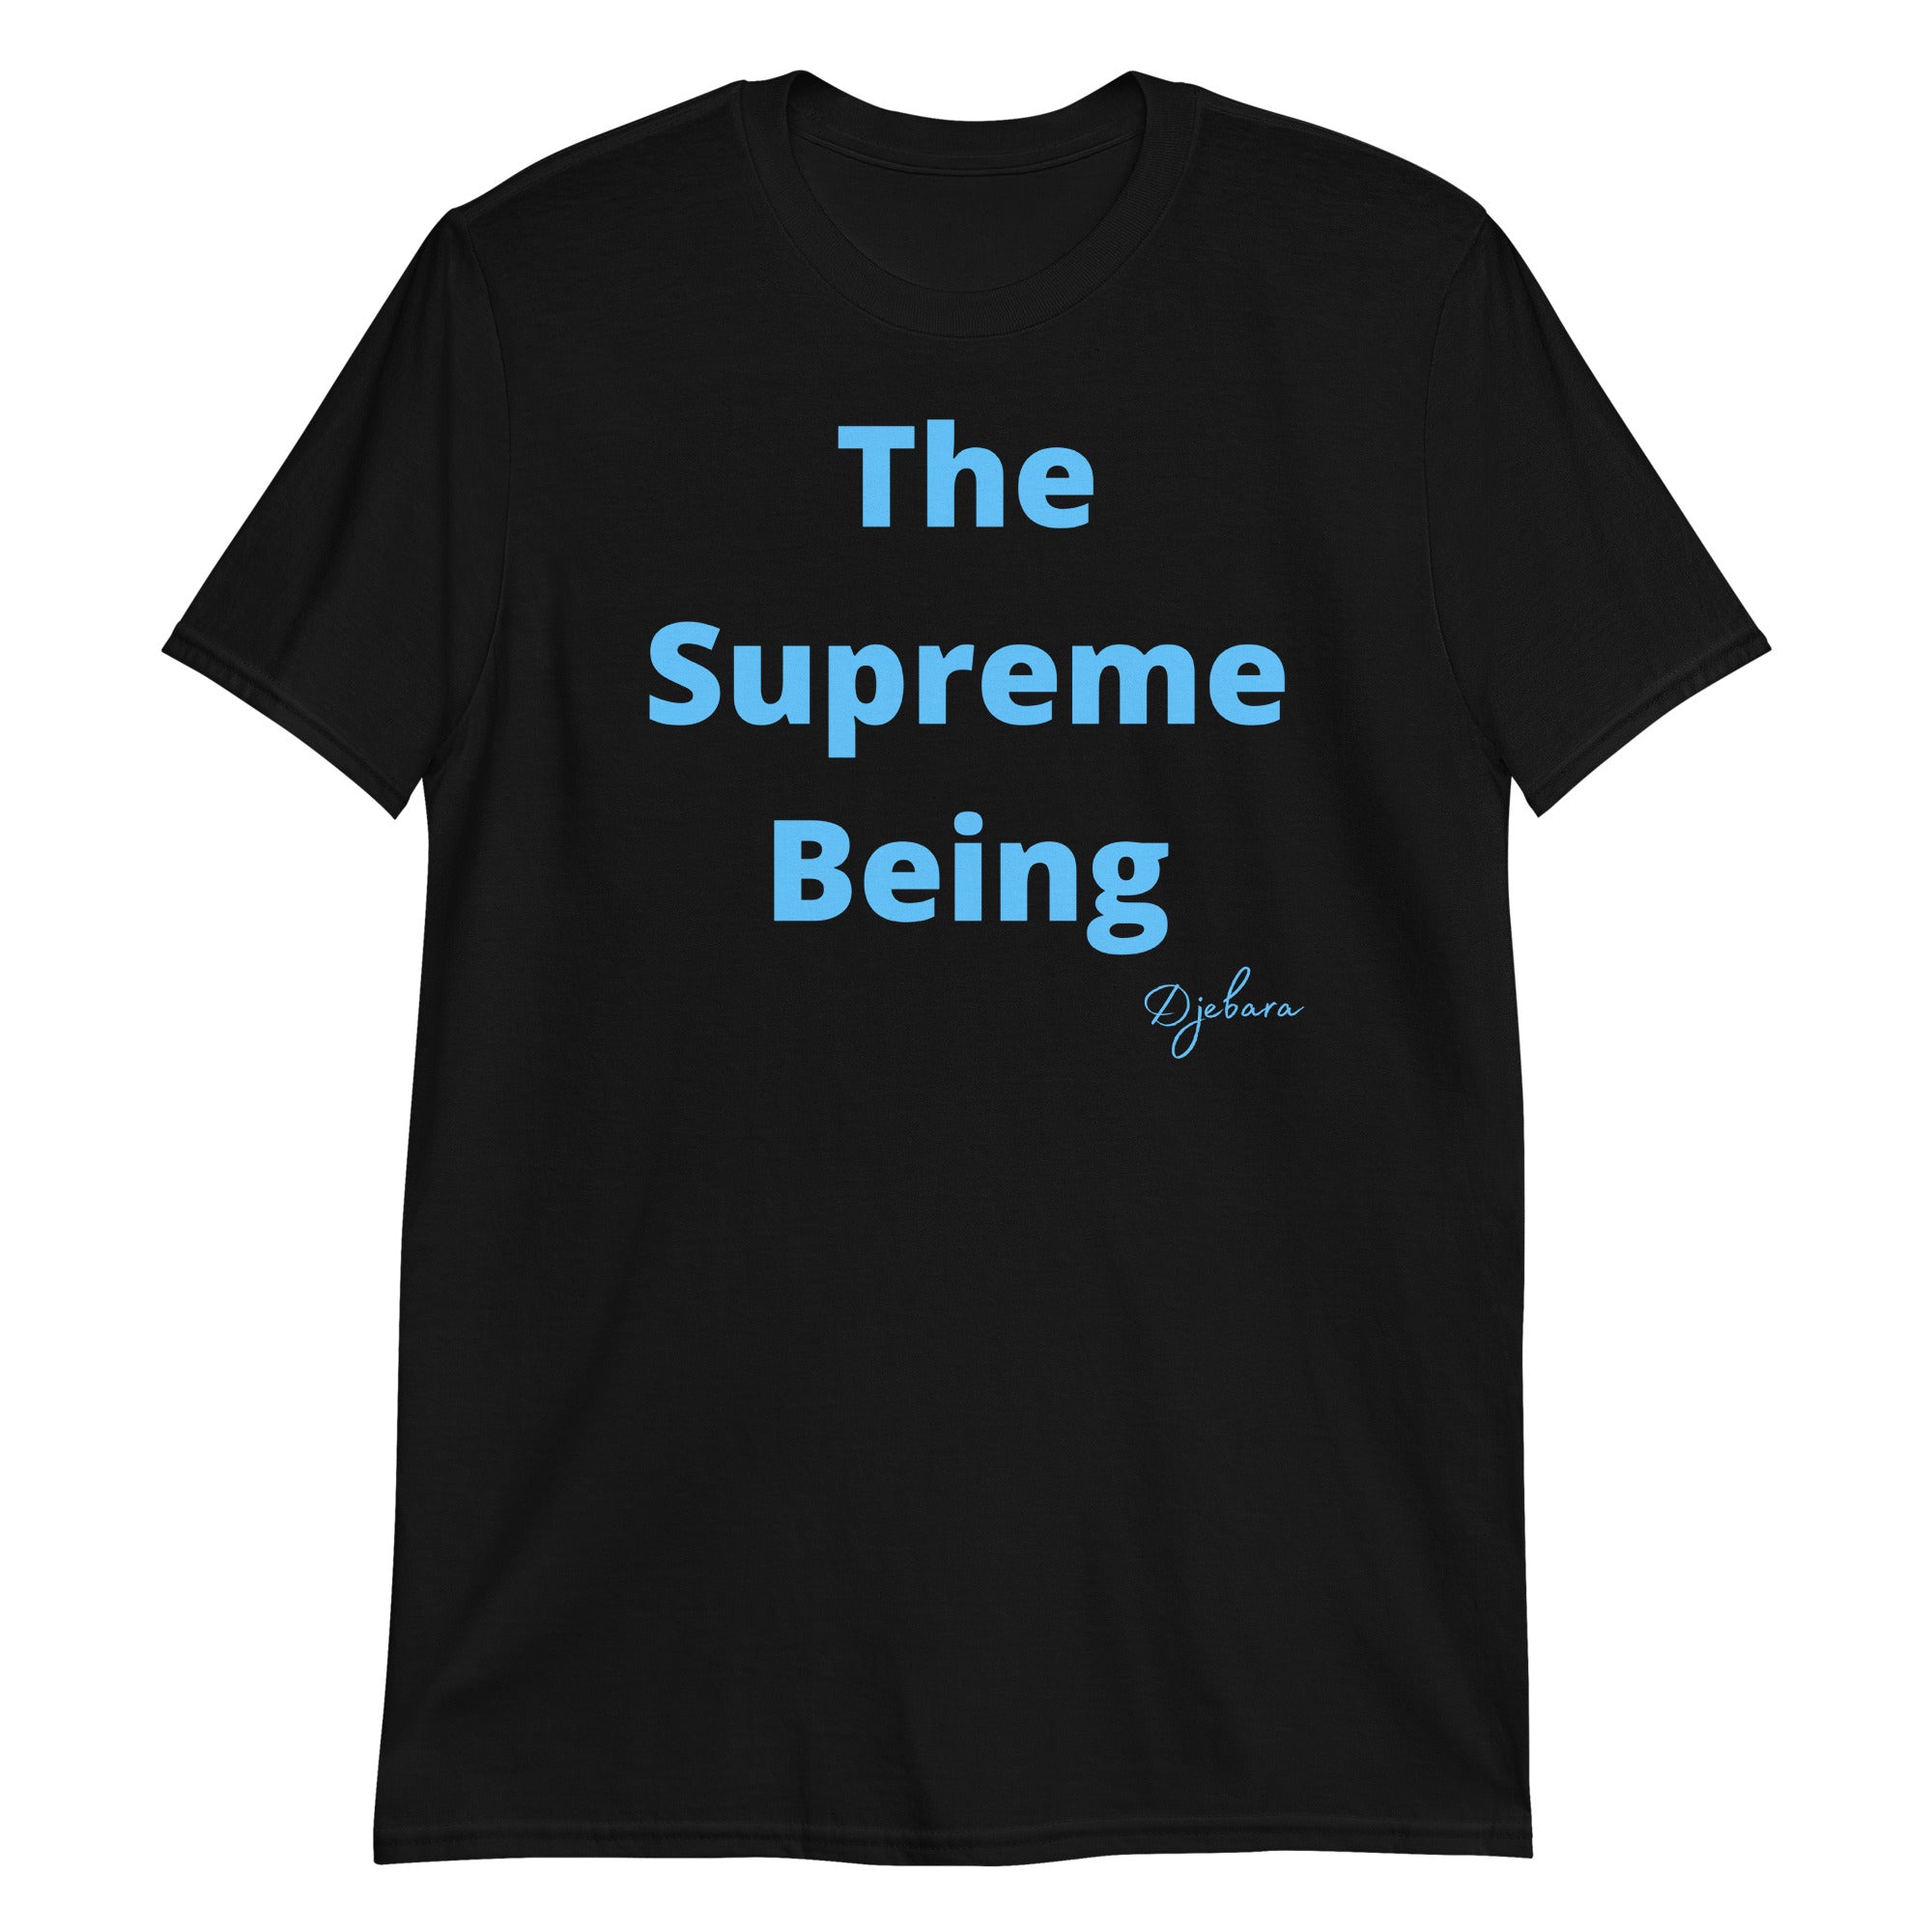 Black The Supreme Being Short-Sleeve Gildan Unisex T-Shirt (L-Blue) S-3XL